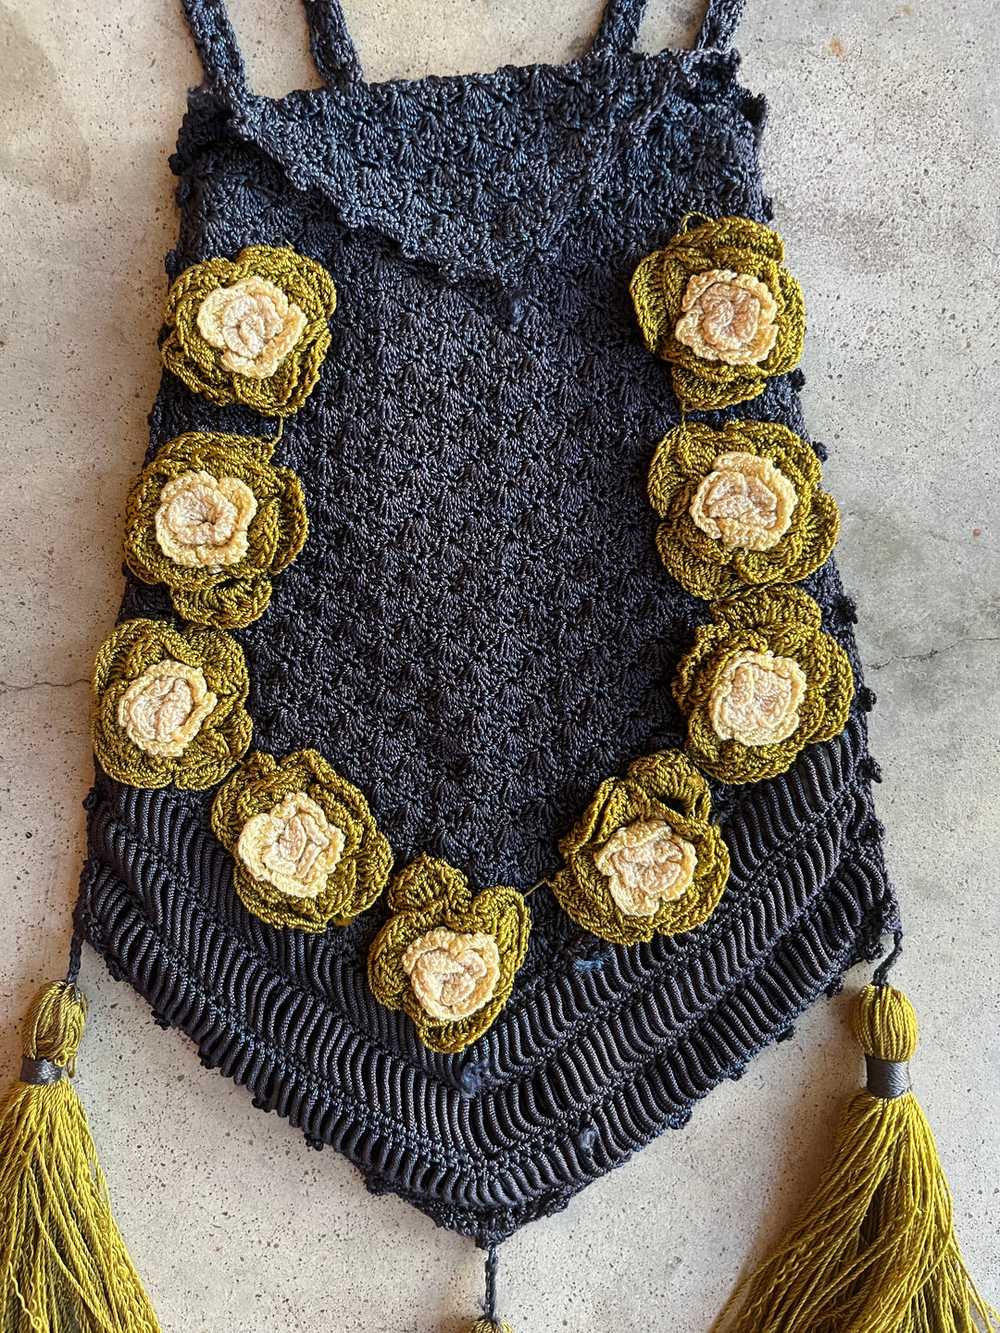 c. 1910s-1920s Crochet Purse - image 4